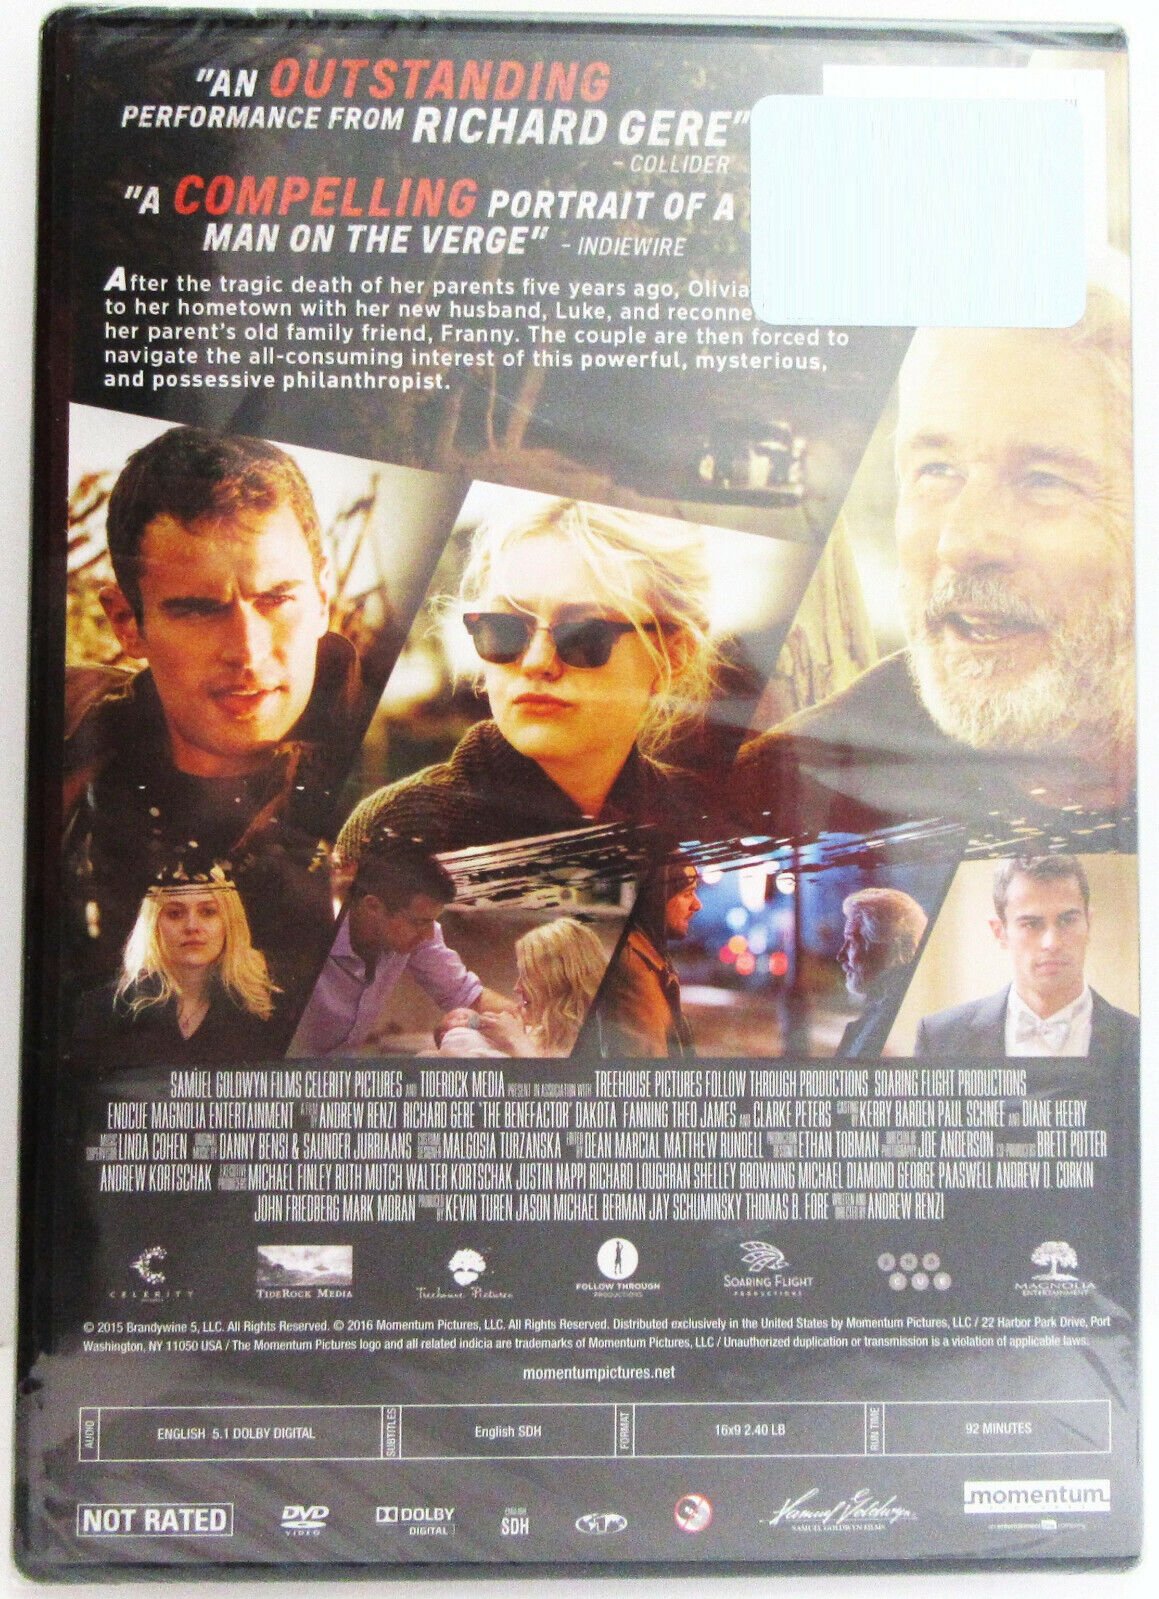 The Benefactor ~ Richard Gere ~ 2015 ~ Drama Movie ~ New DVD